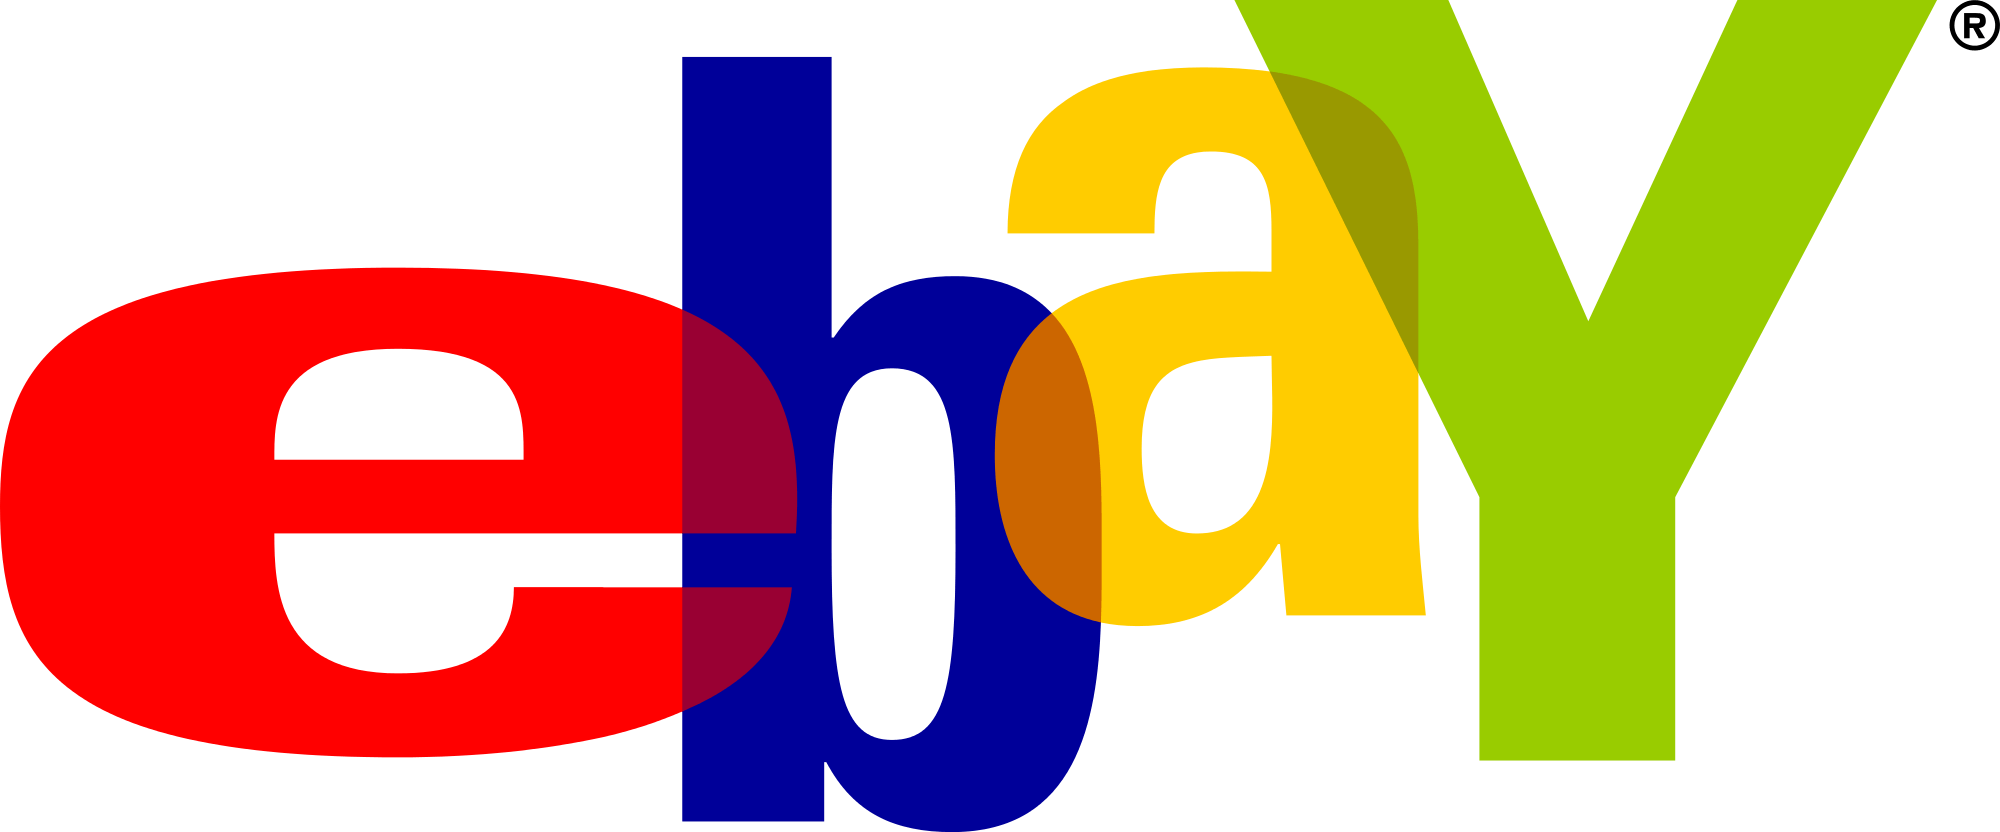 eBay Inc. Logo - eBay Inc (NASDAQ:EBAY) Founder Omidyar Leaves PayPal Holdings Inc ...